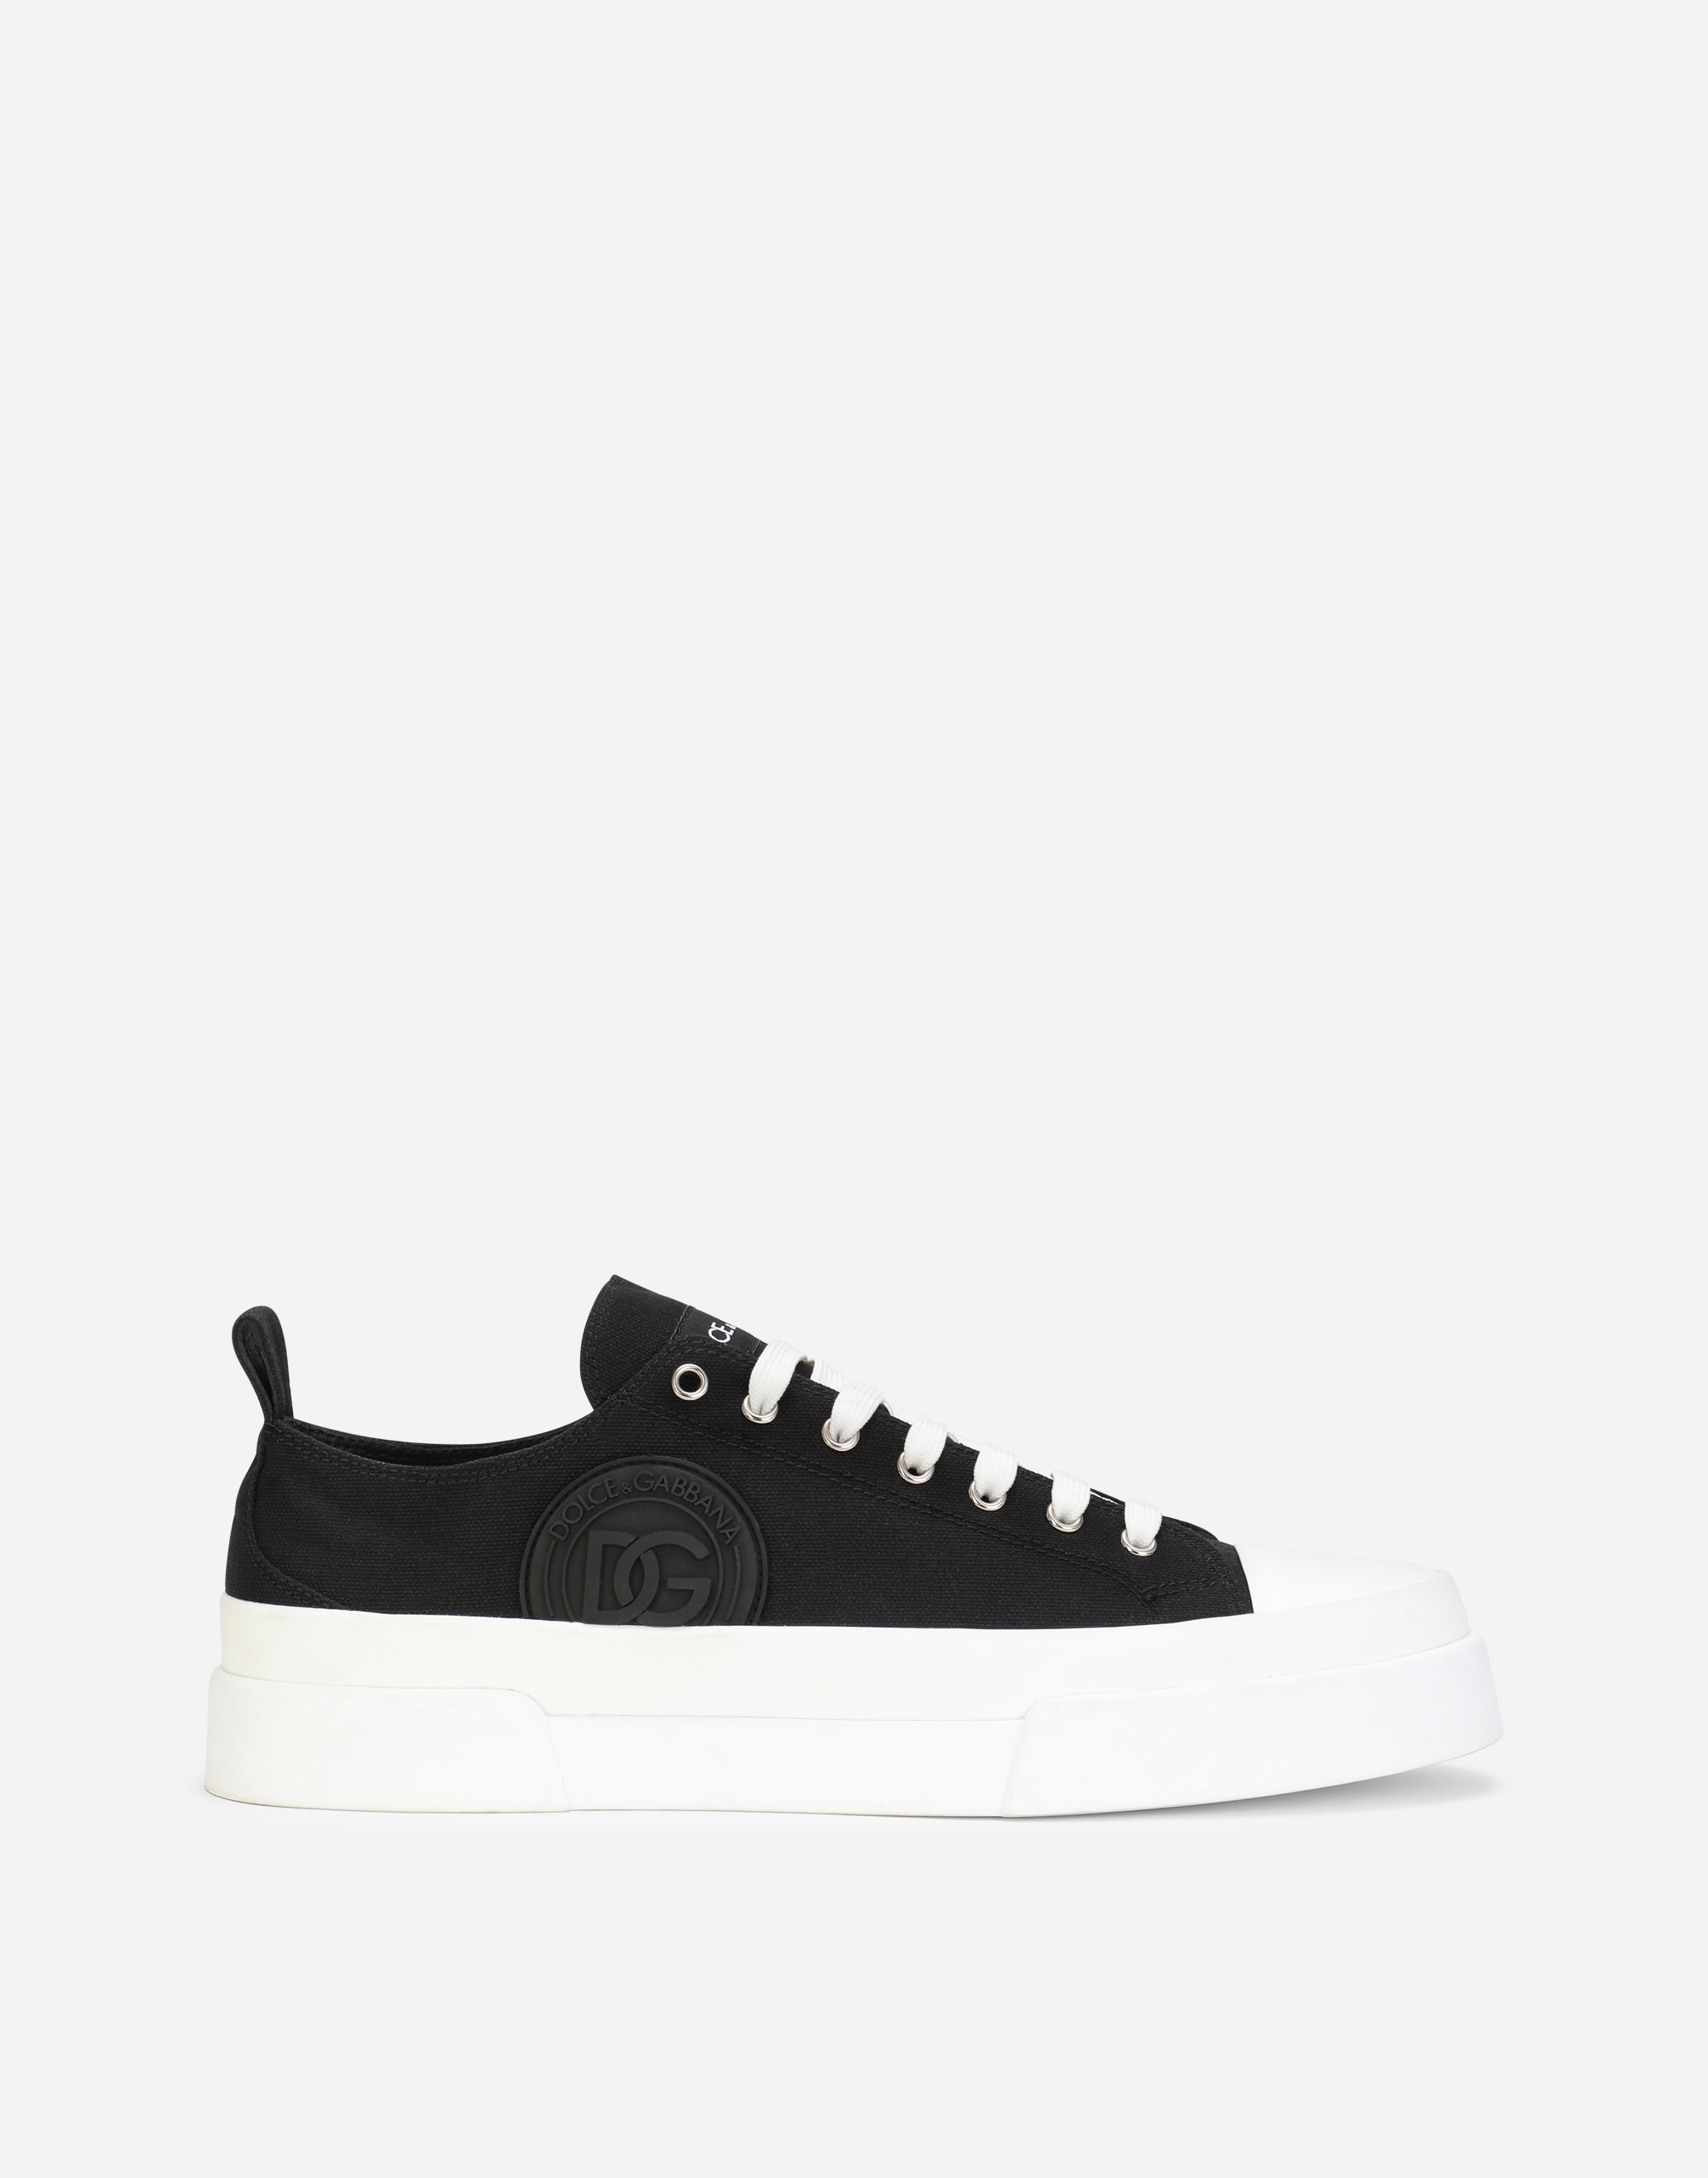 Canvas Portofino Light sneakers with DG logo in White/Black